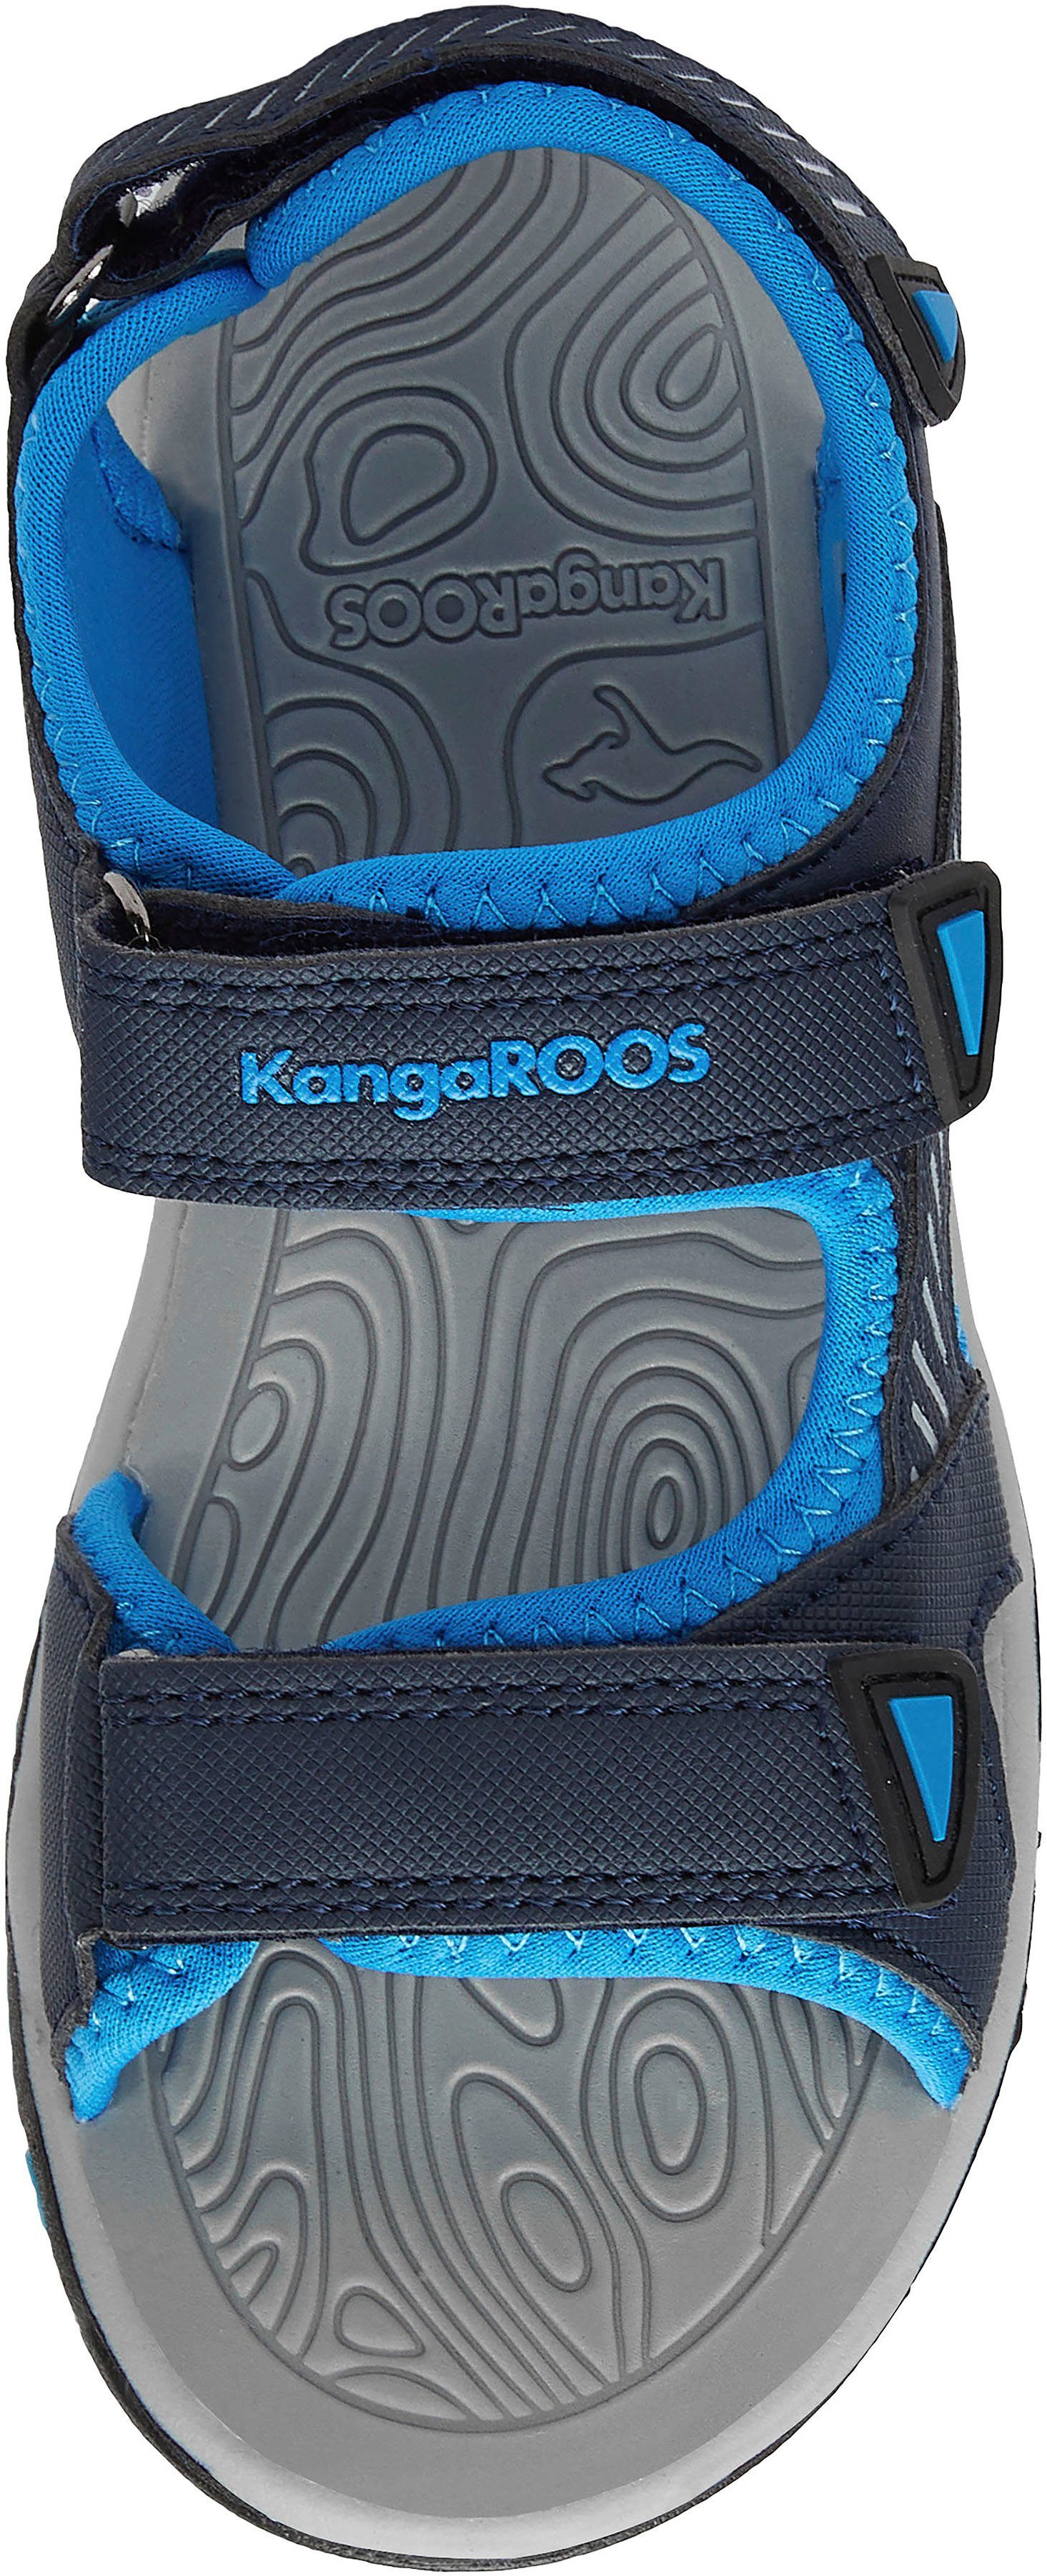 KangaROOS K-Celtic Barbo Sandale blau mit Klettverschluss